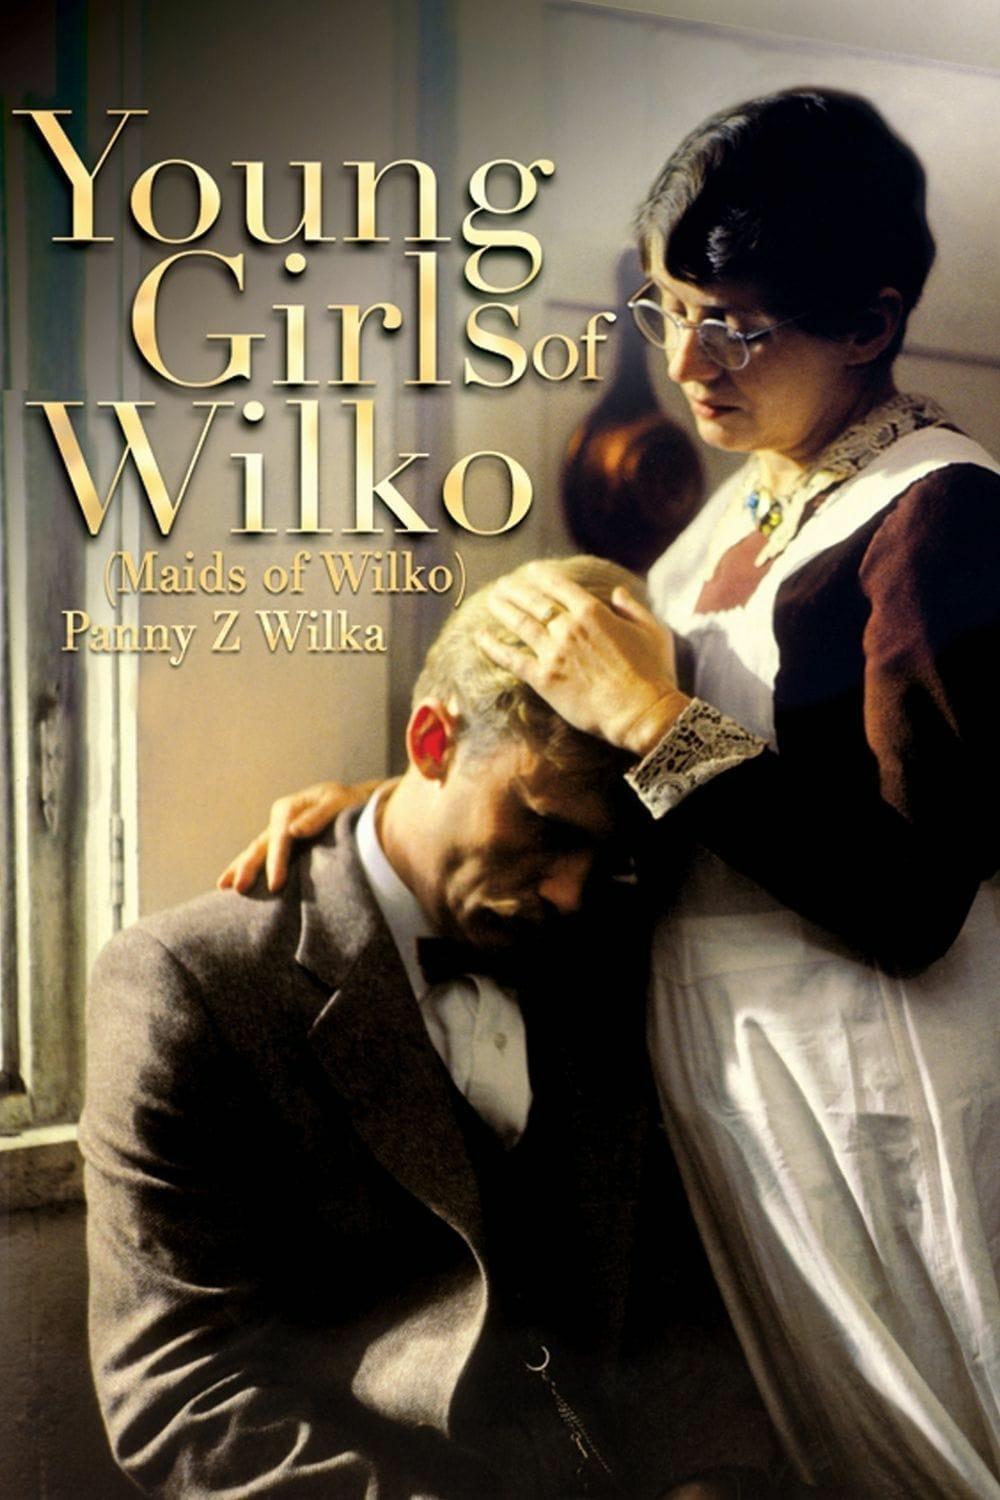 The Maids of Wilko poster